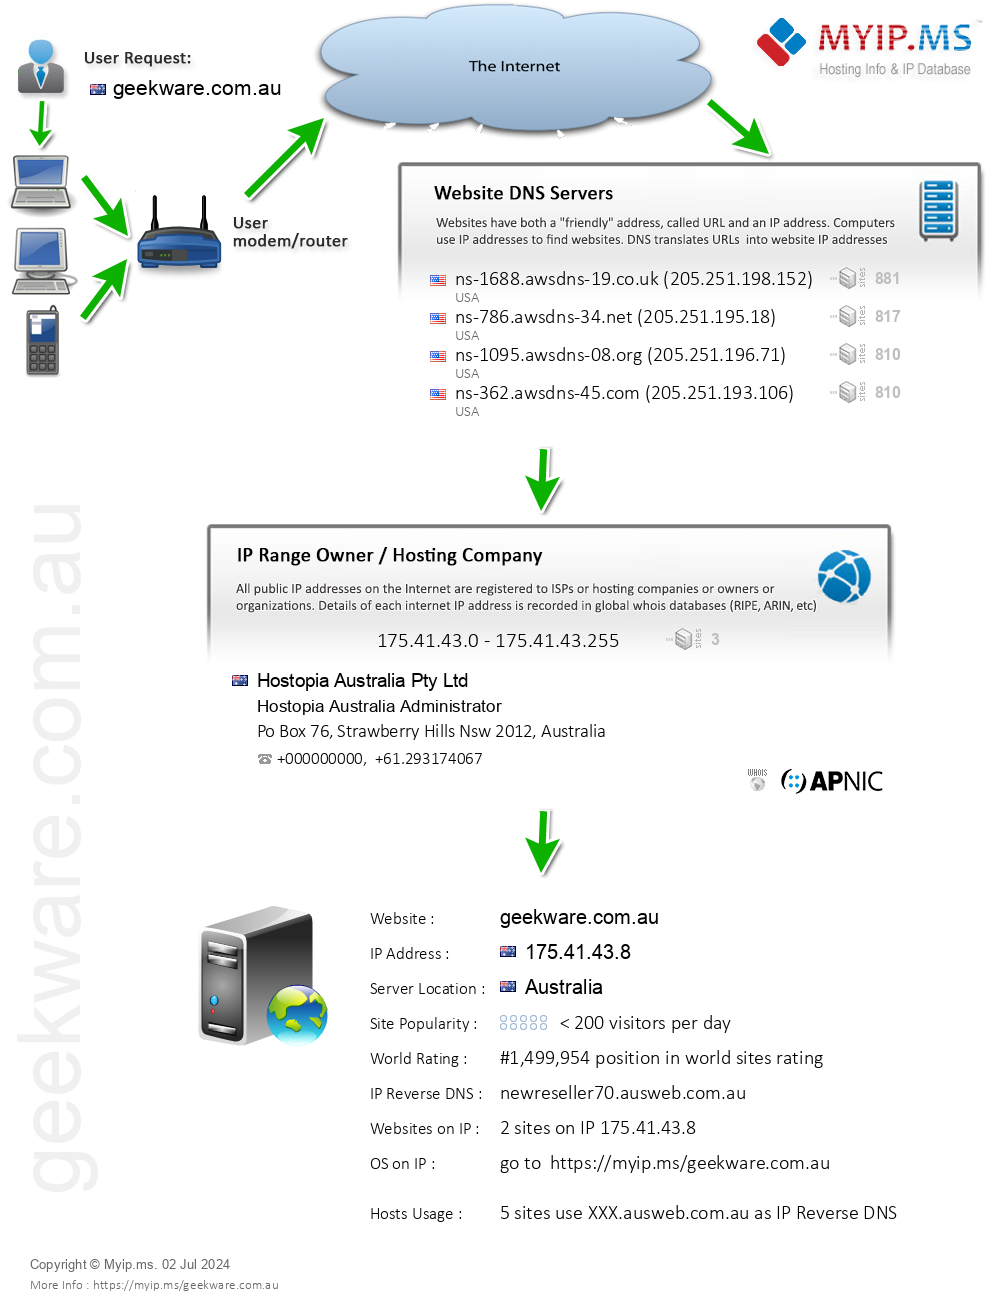 Geekware.com.au - Website Hosting Visual IP Diagram